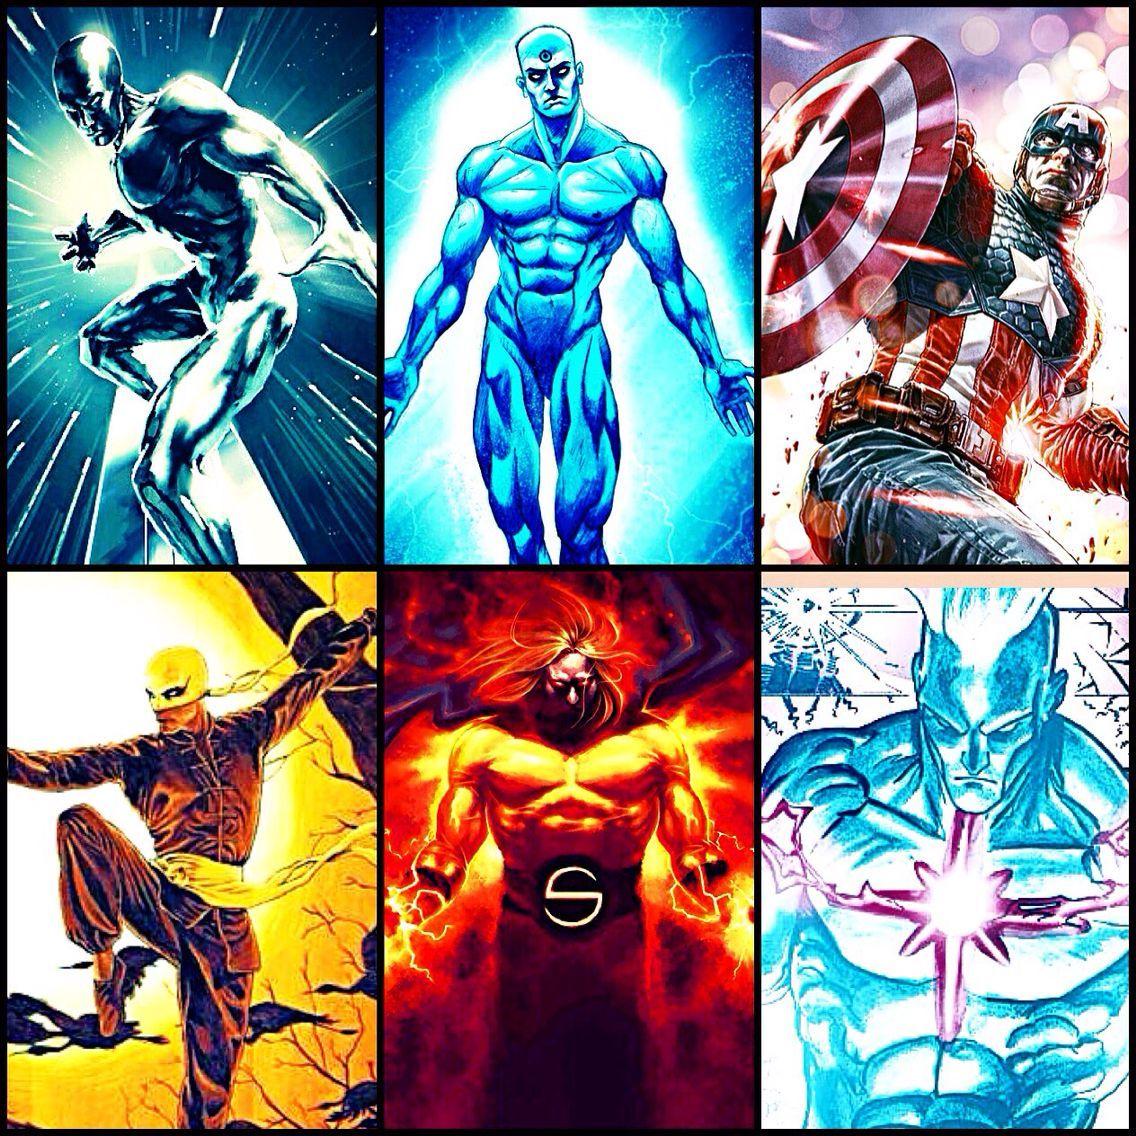 My dream team: Silver Surfer, Dr. Manhattan, Captain America, Iron